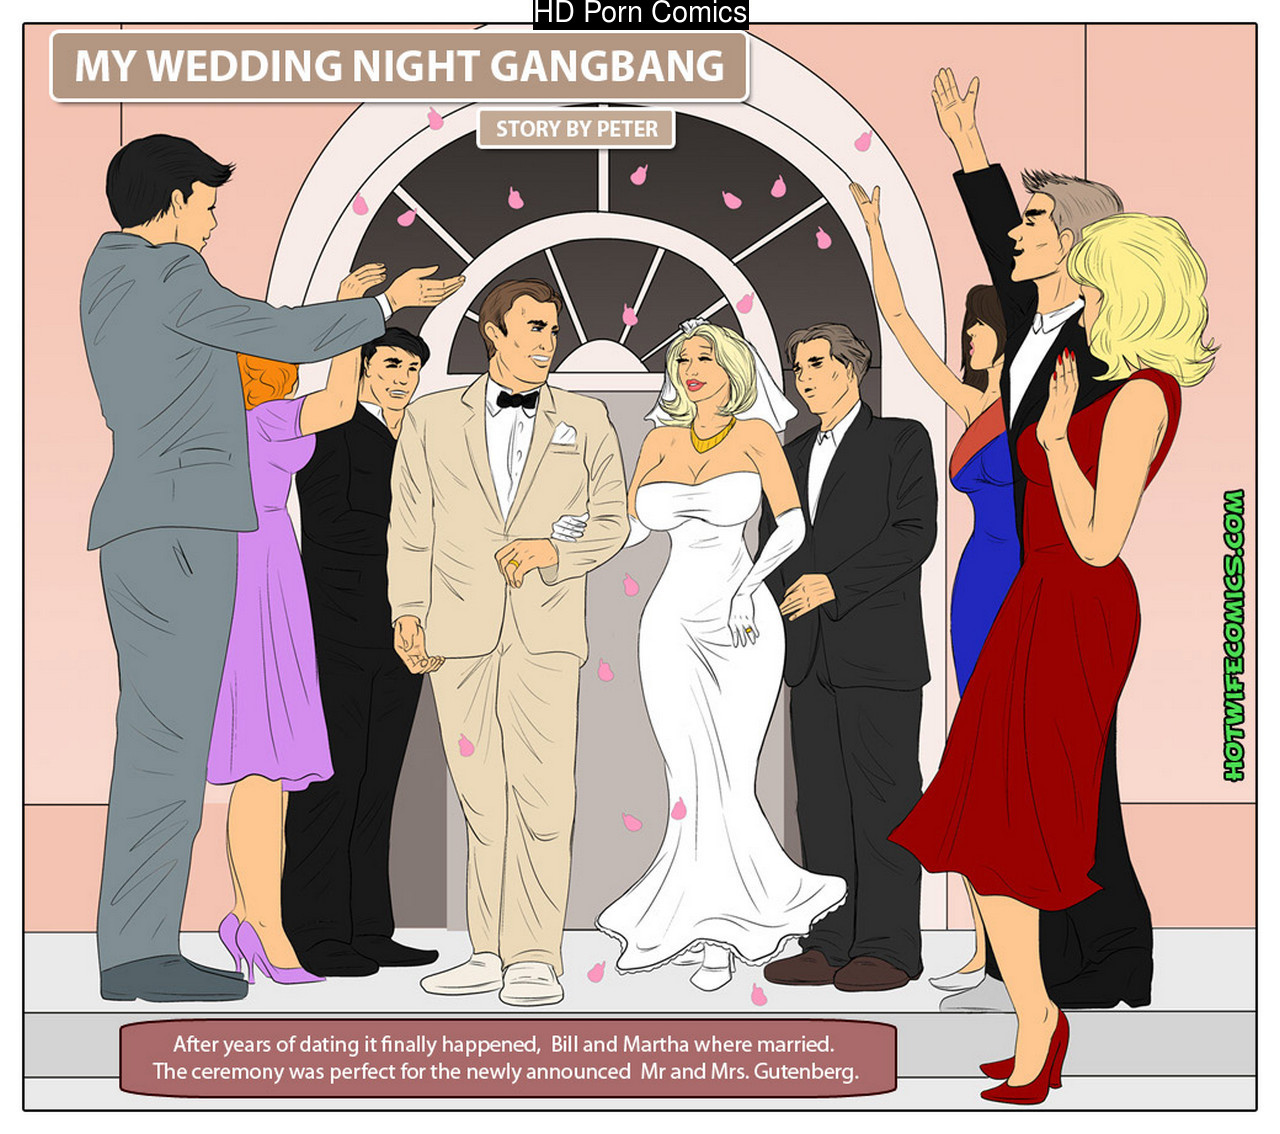 Bride Gangbang Galleries - My Wedding Night Gangbang comic porn â€“ HD Porn Comics